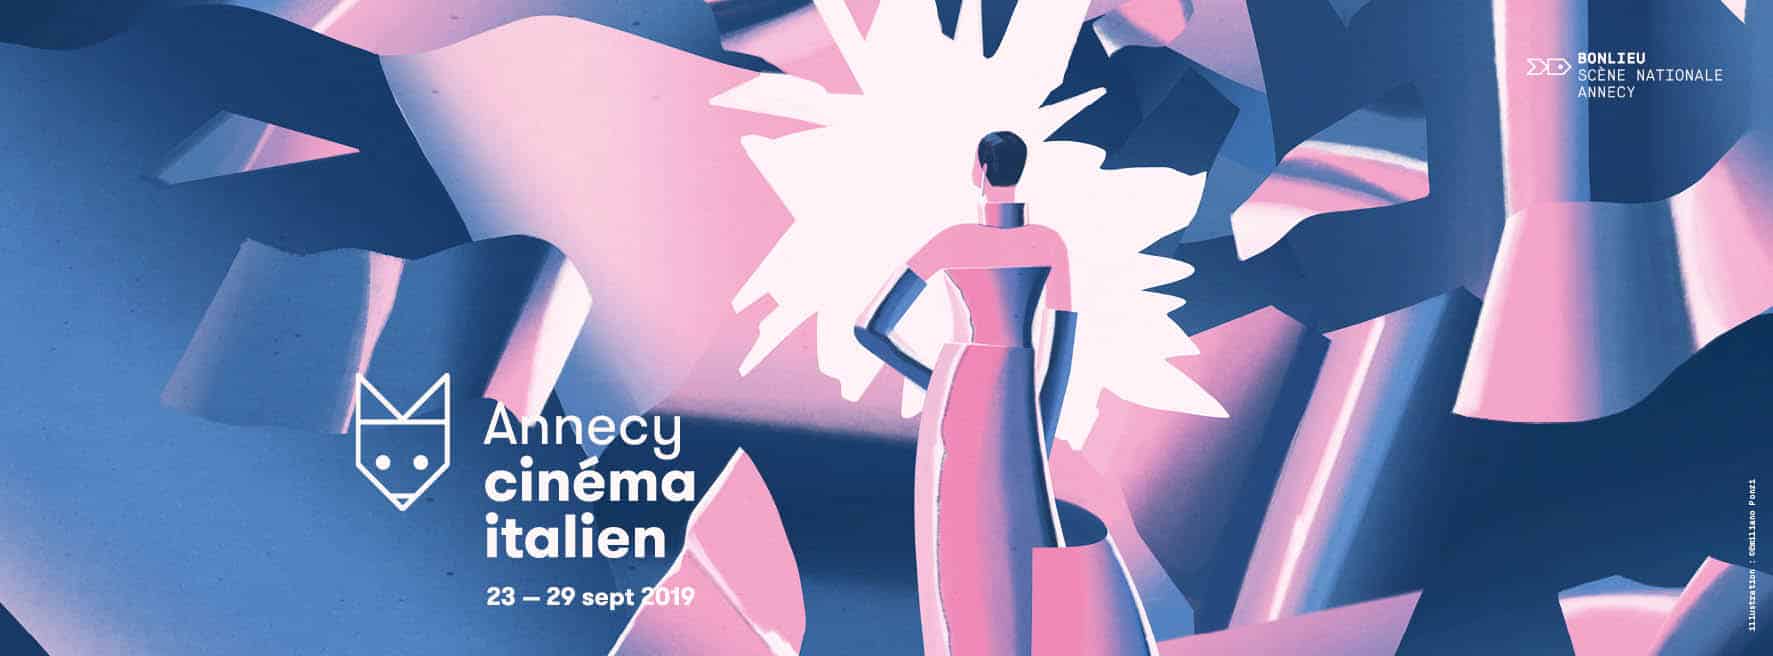 Festival Annecy cinéma italien 2019